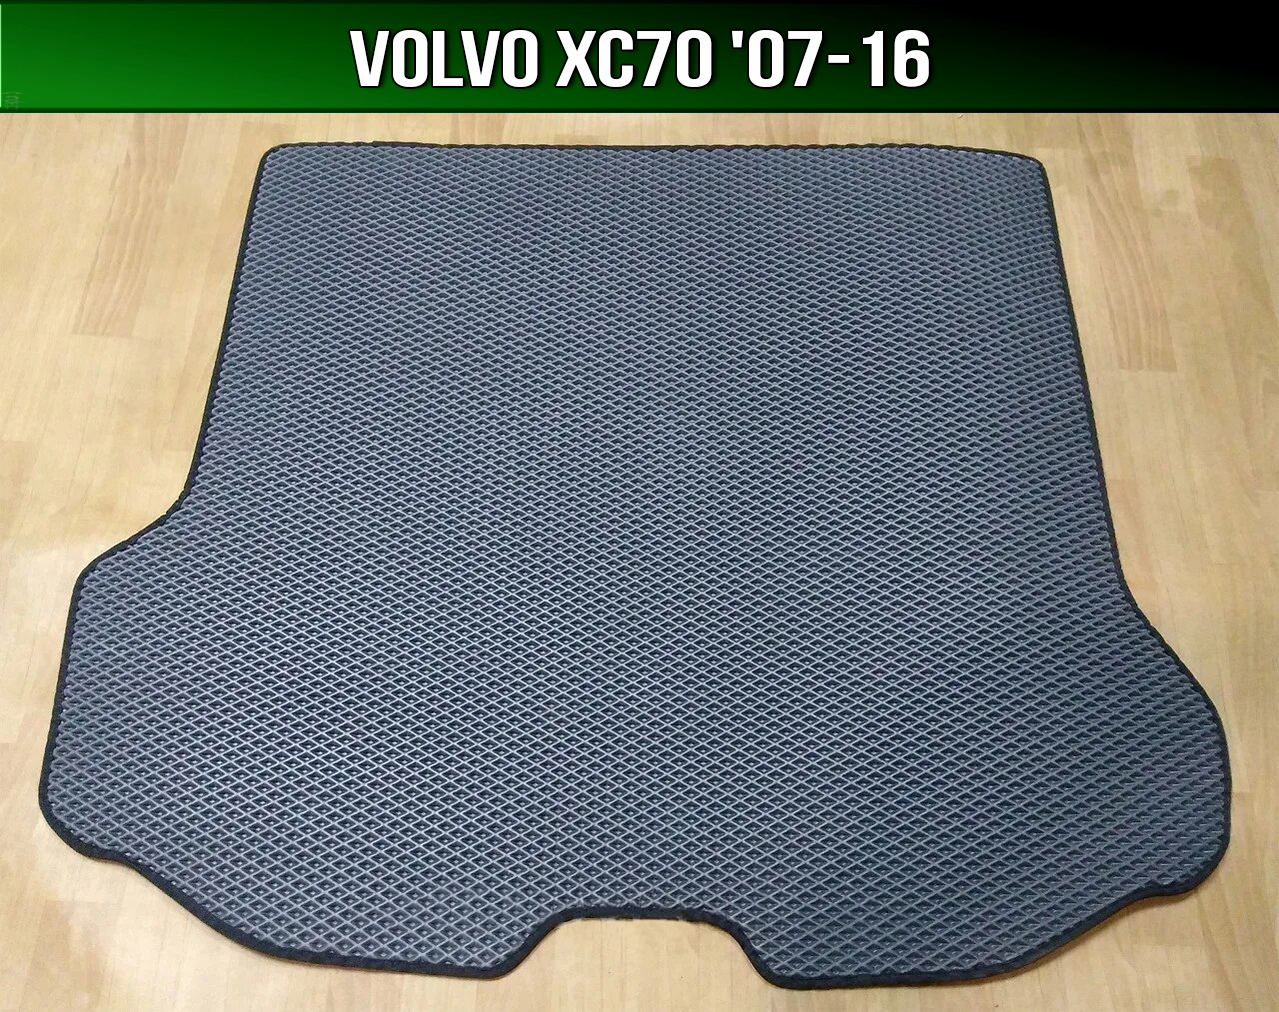 ЄВА килимок в багажник Volvo XC70 '07-16. EVA килим багажника Вольво ХЦ70 ХС70